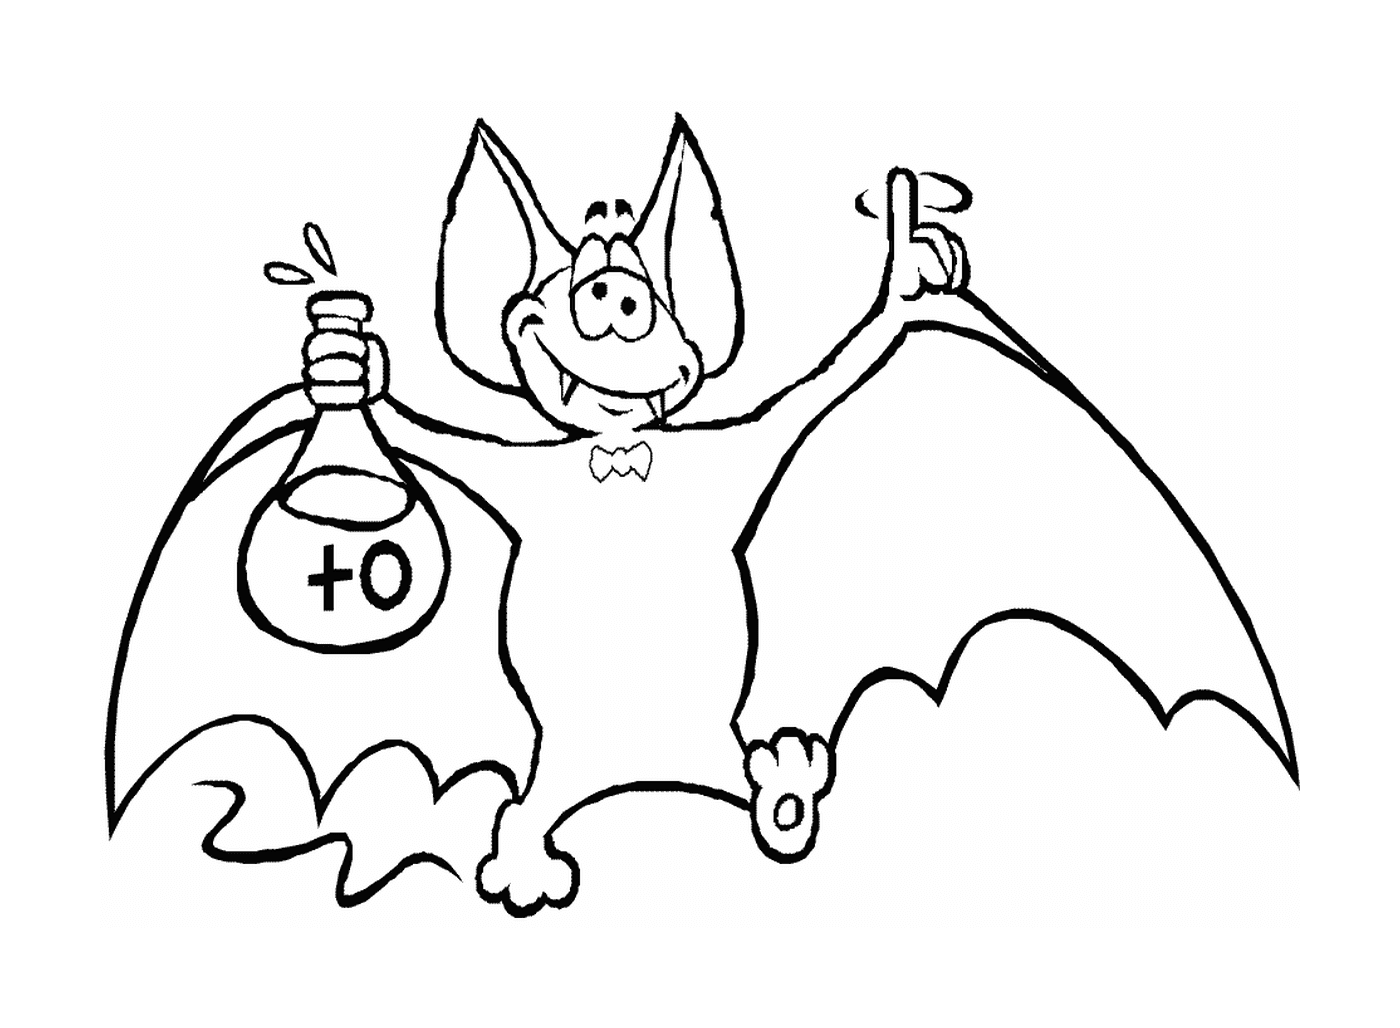  vampire bat holding a bottle of potion 